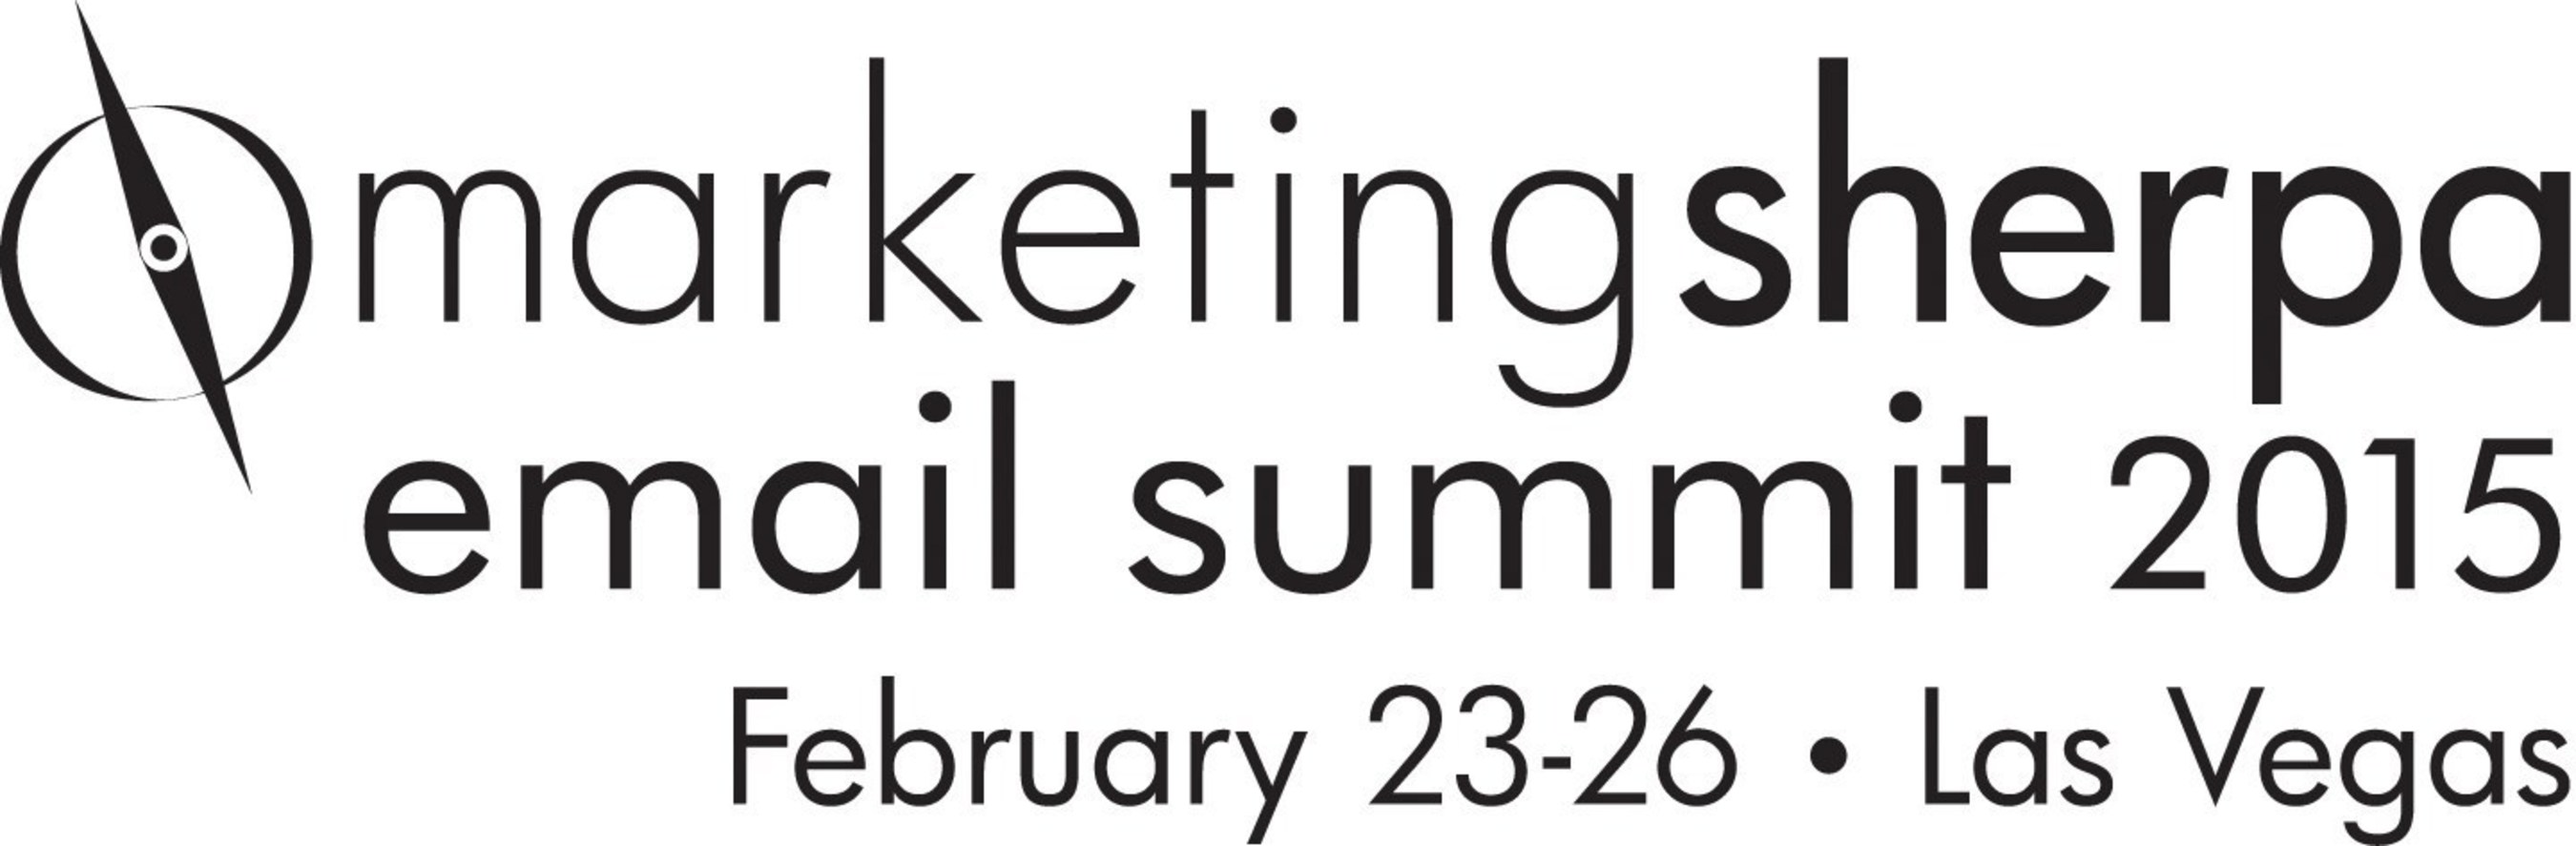 MarketingSherpa Email Summit 2015